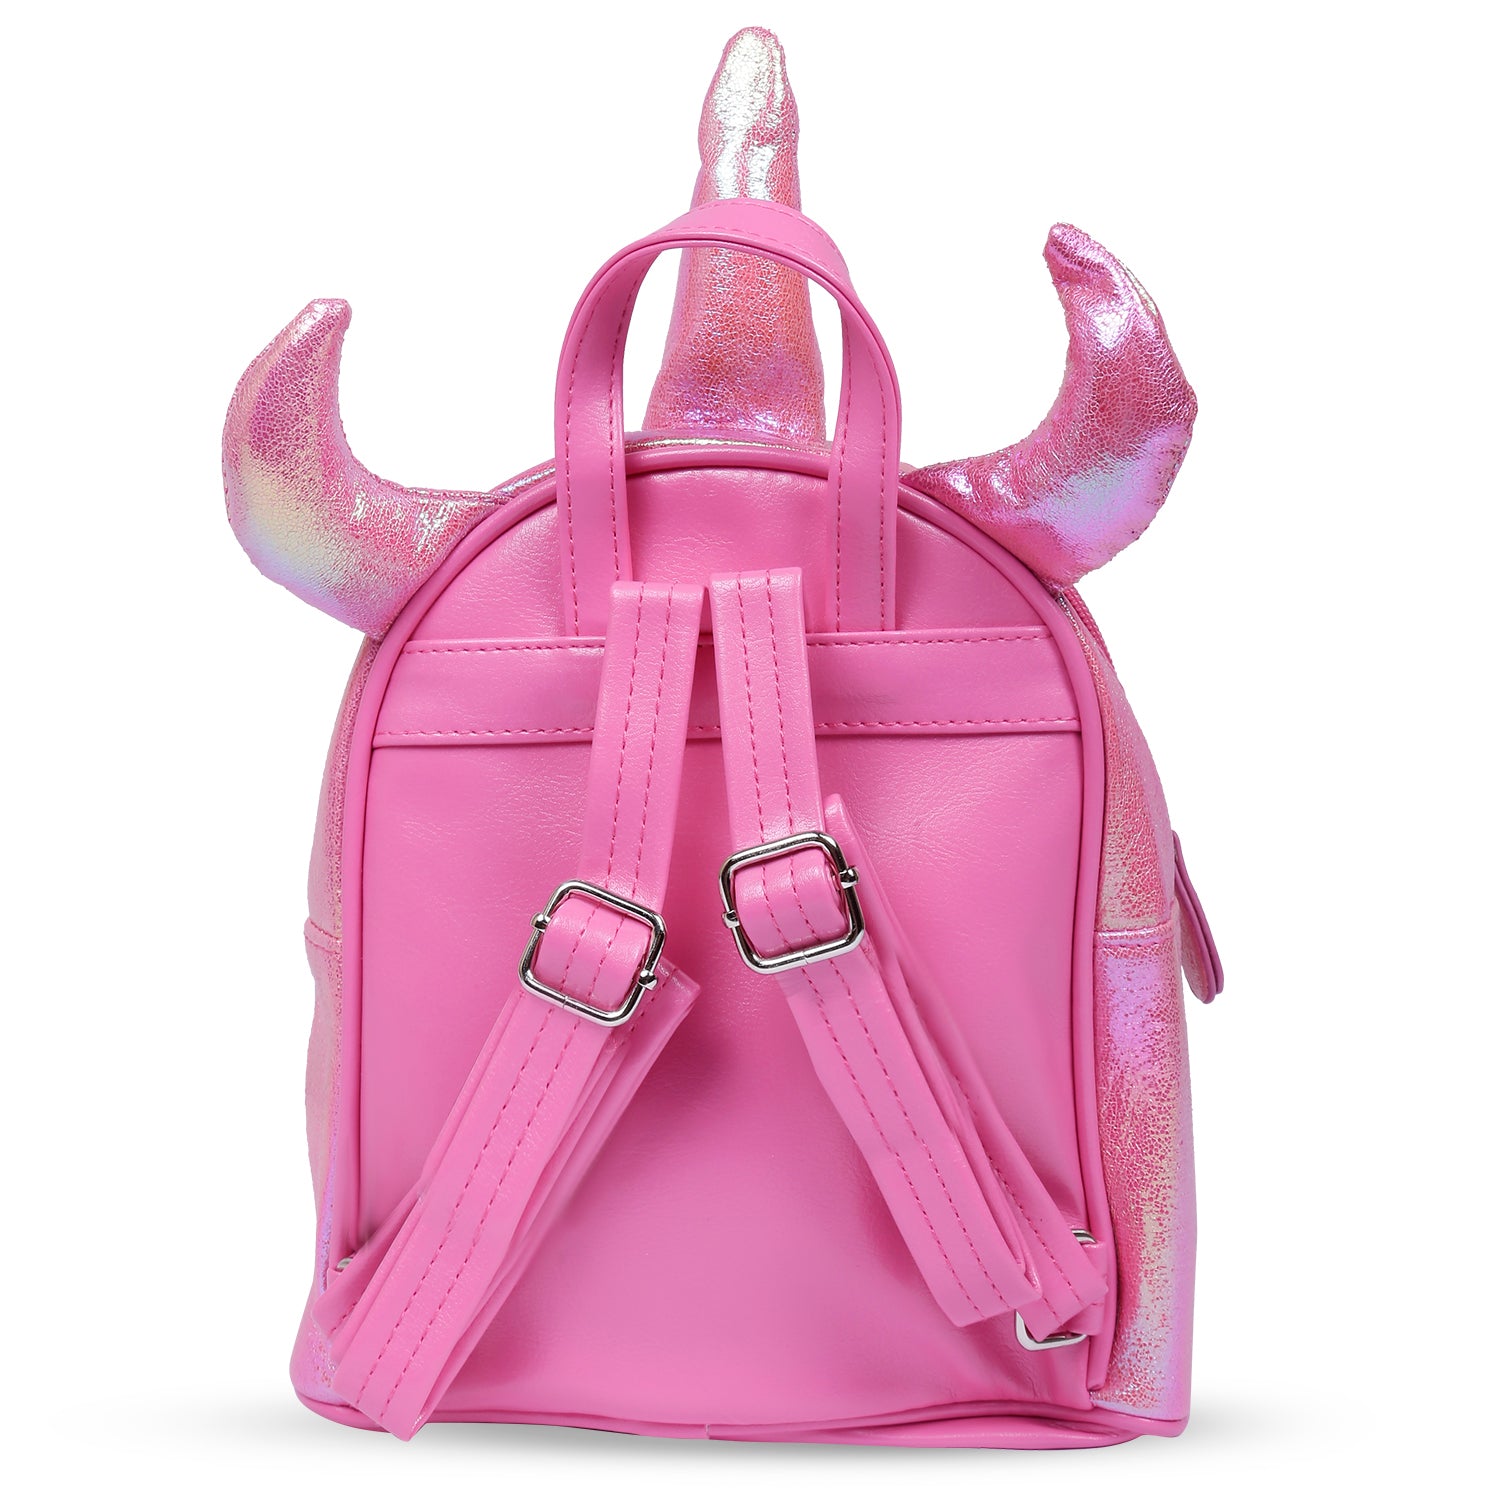 Bright Neon Pink Bag Gold Lock Stock Photo 194097413  Shutterstock